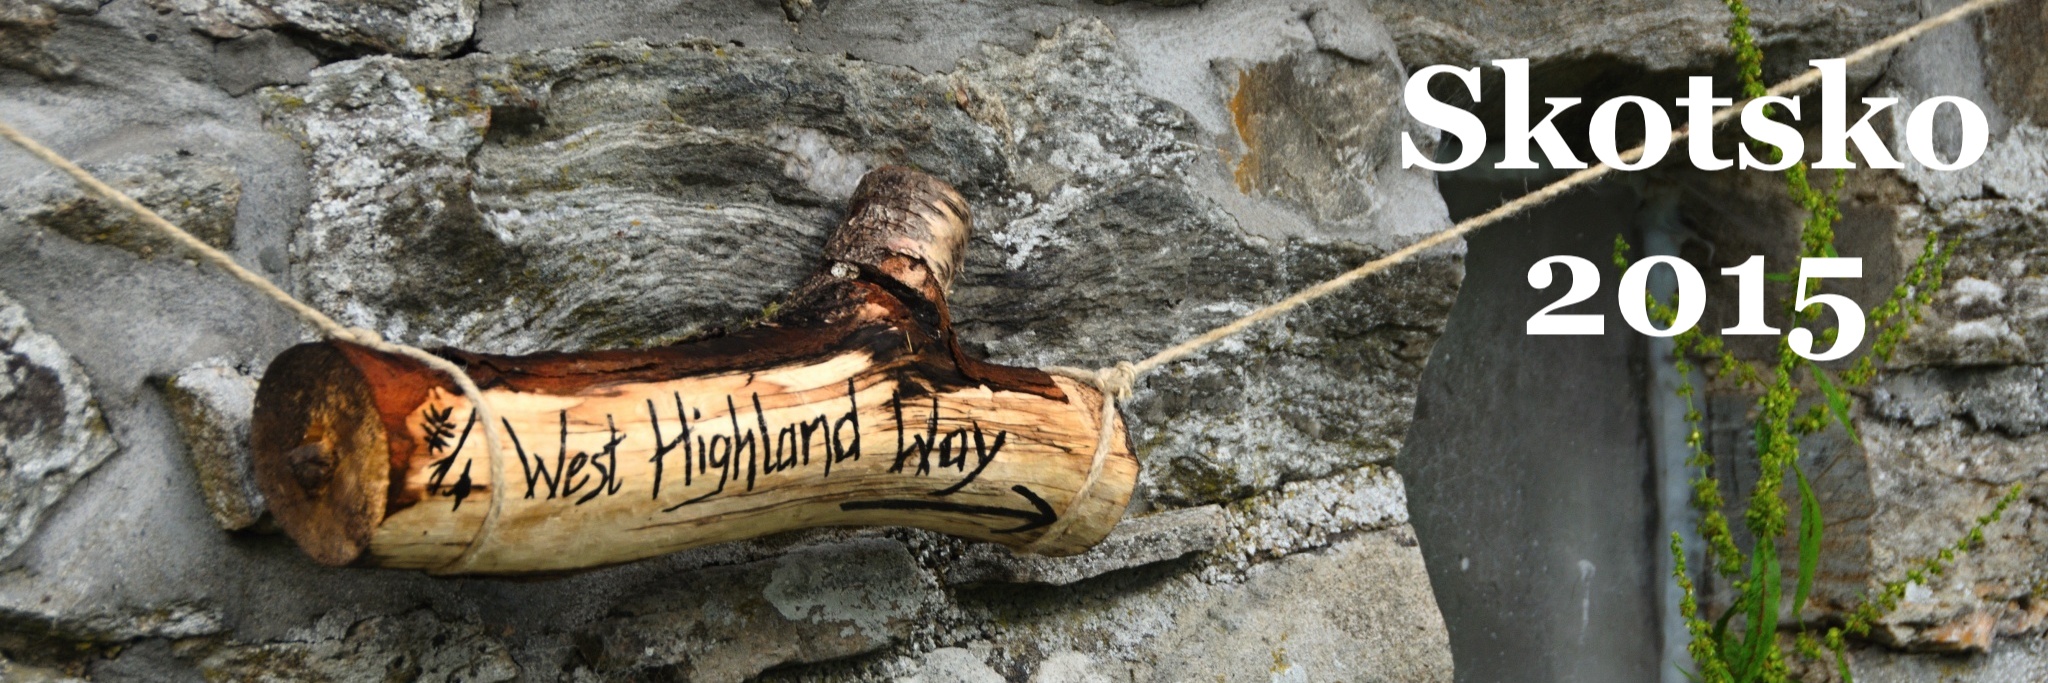 Skotsko 2015 - West Highland Way